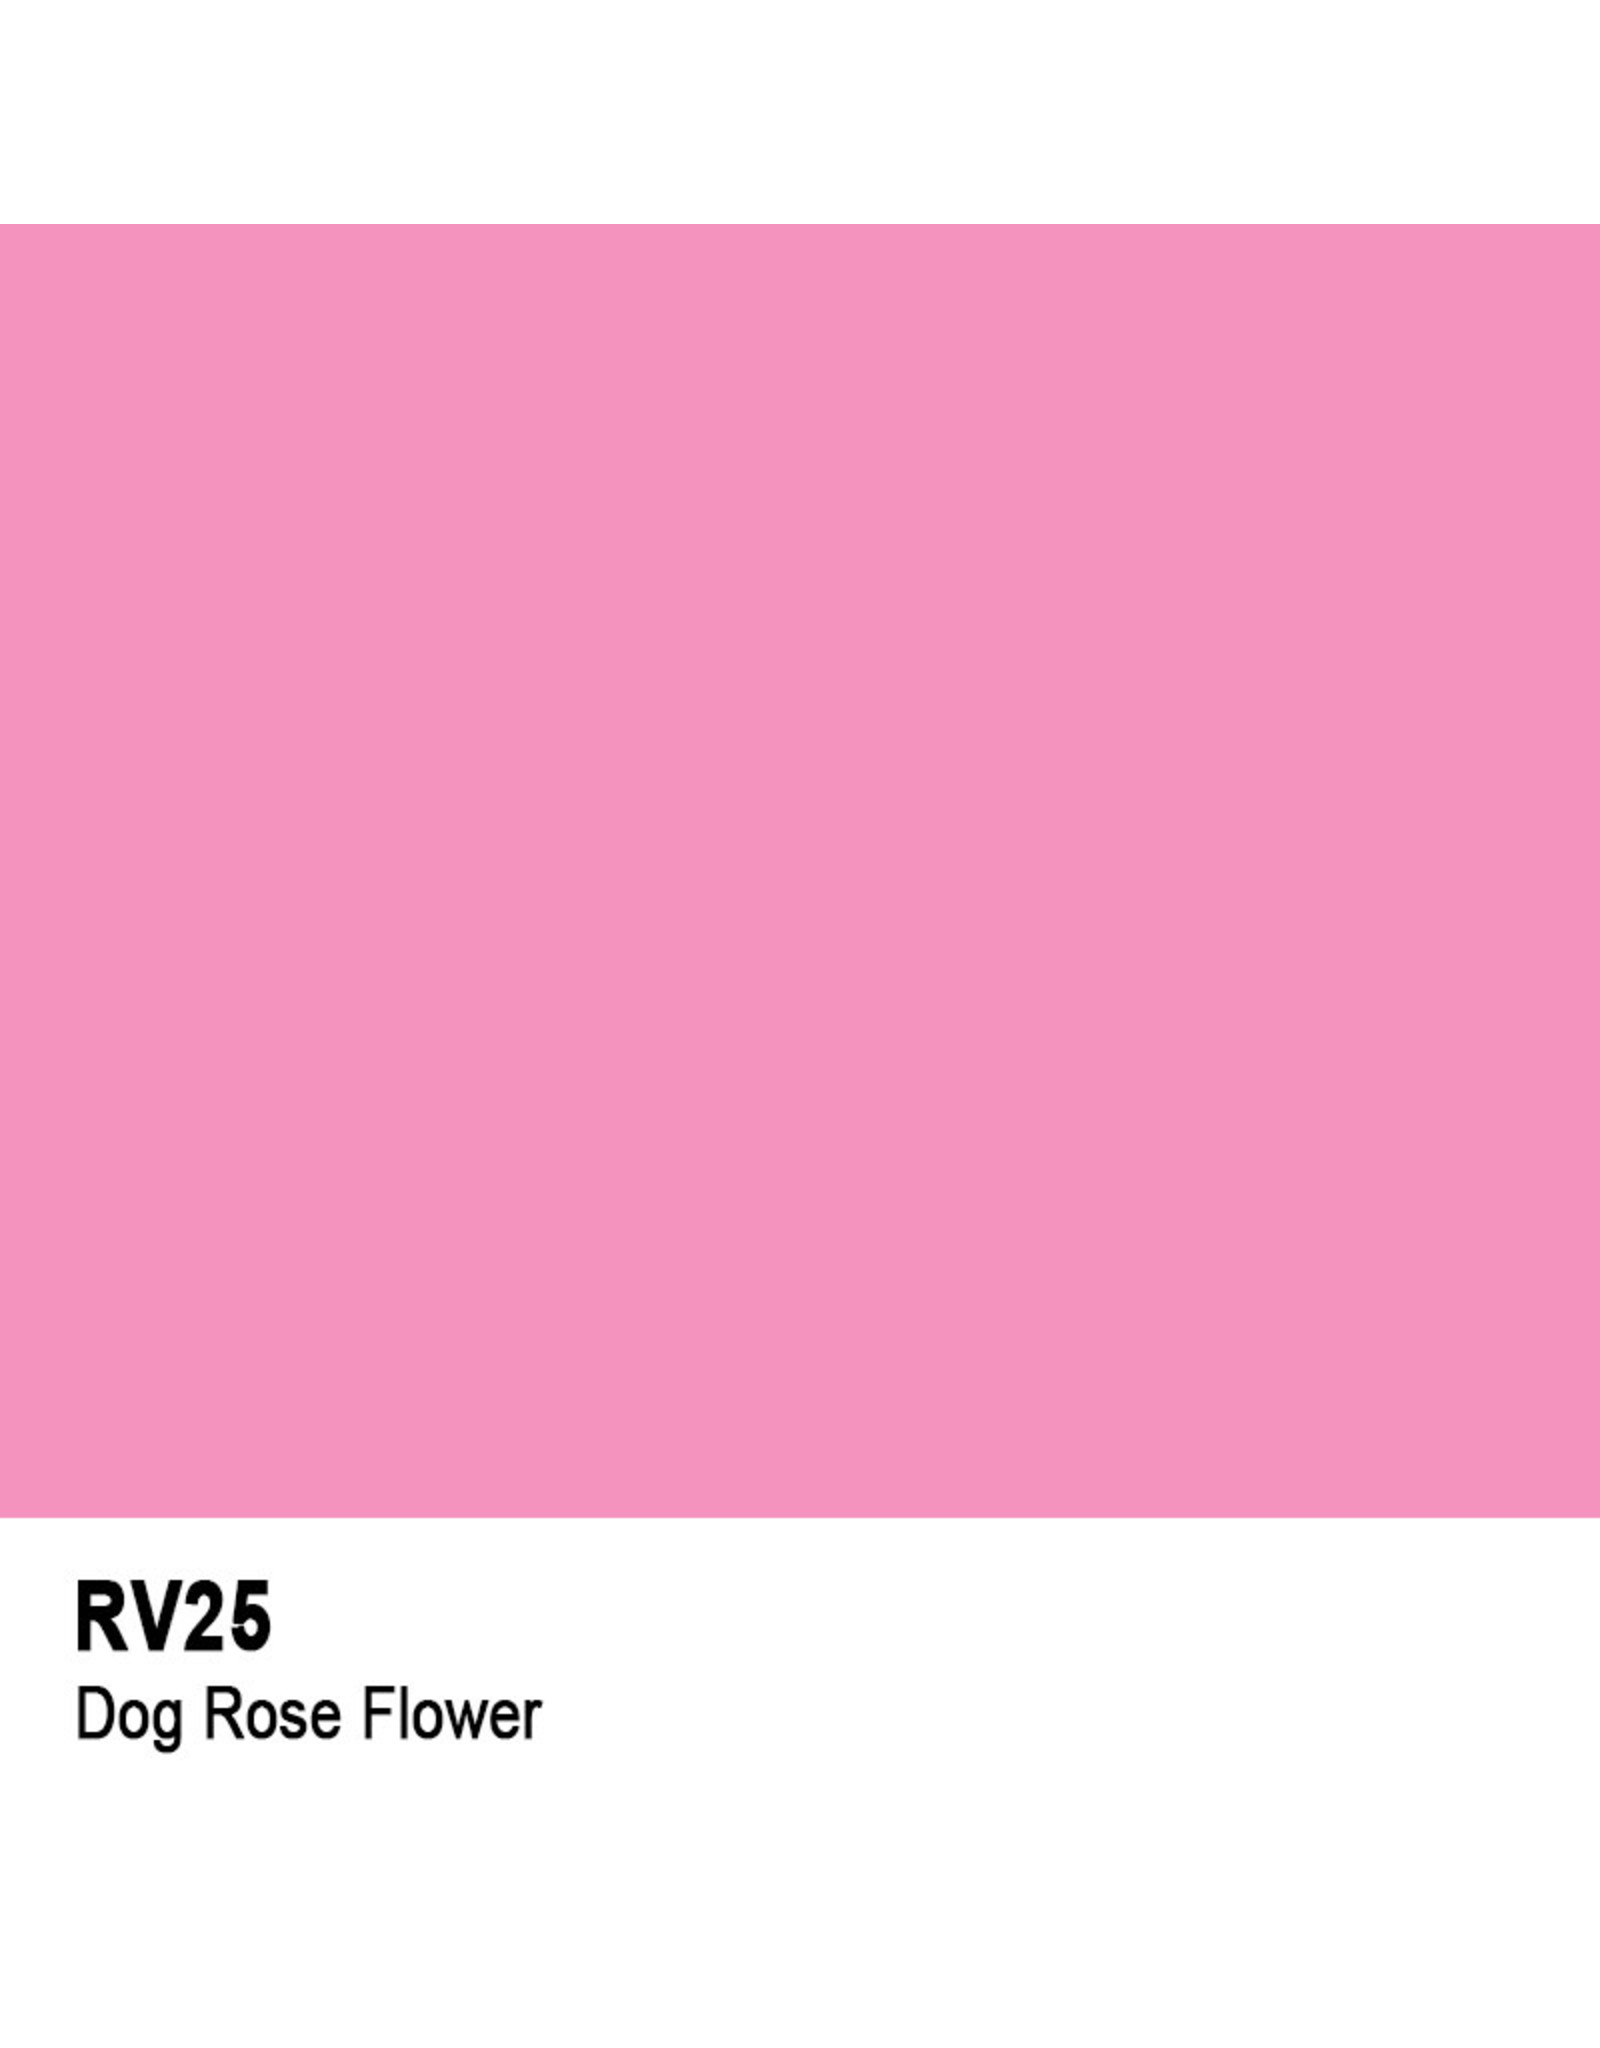 COPIC COPIC RV25 DOG ROSE FLOWER SKETCH MARKER